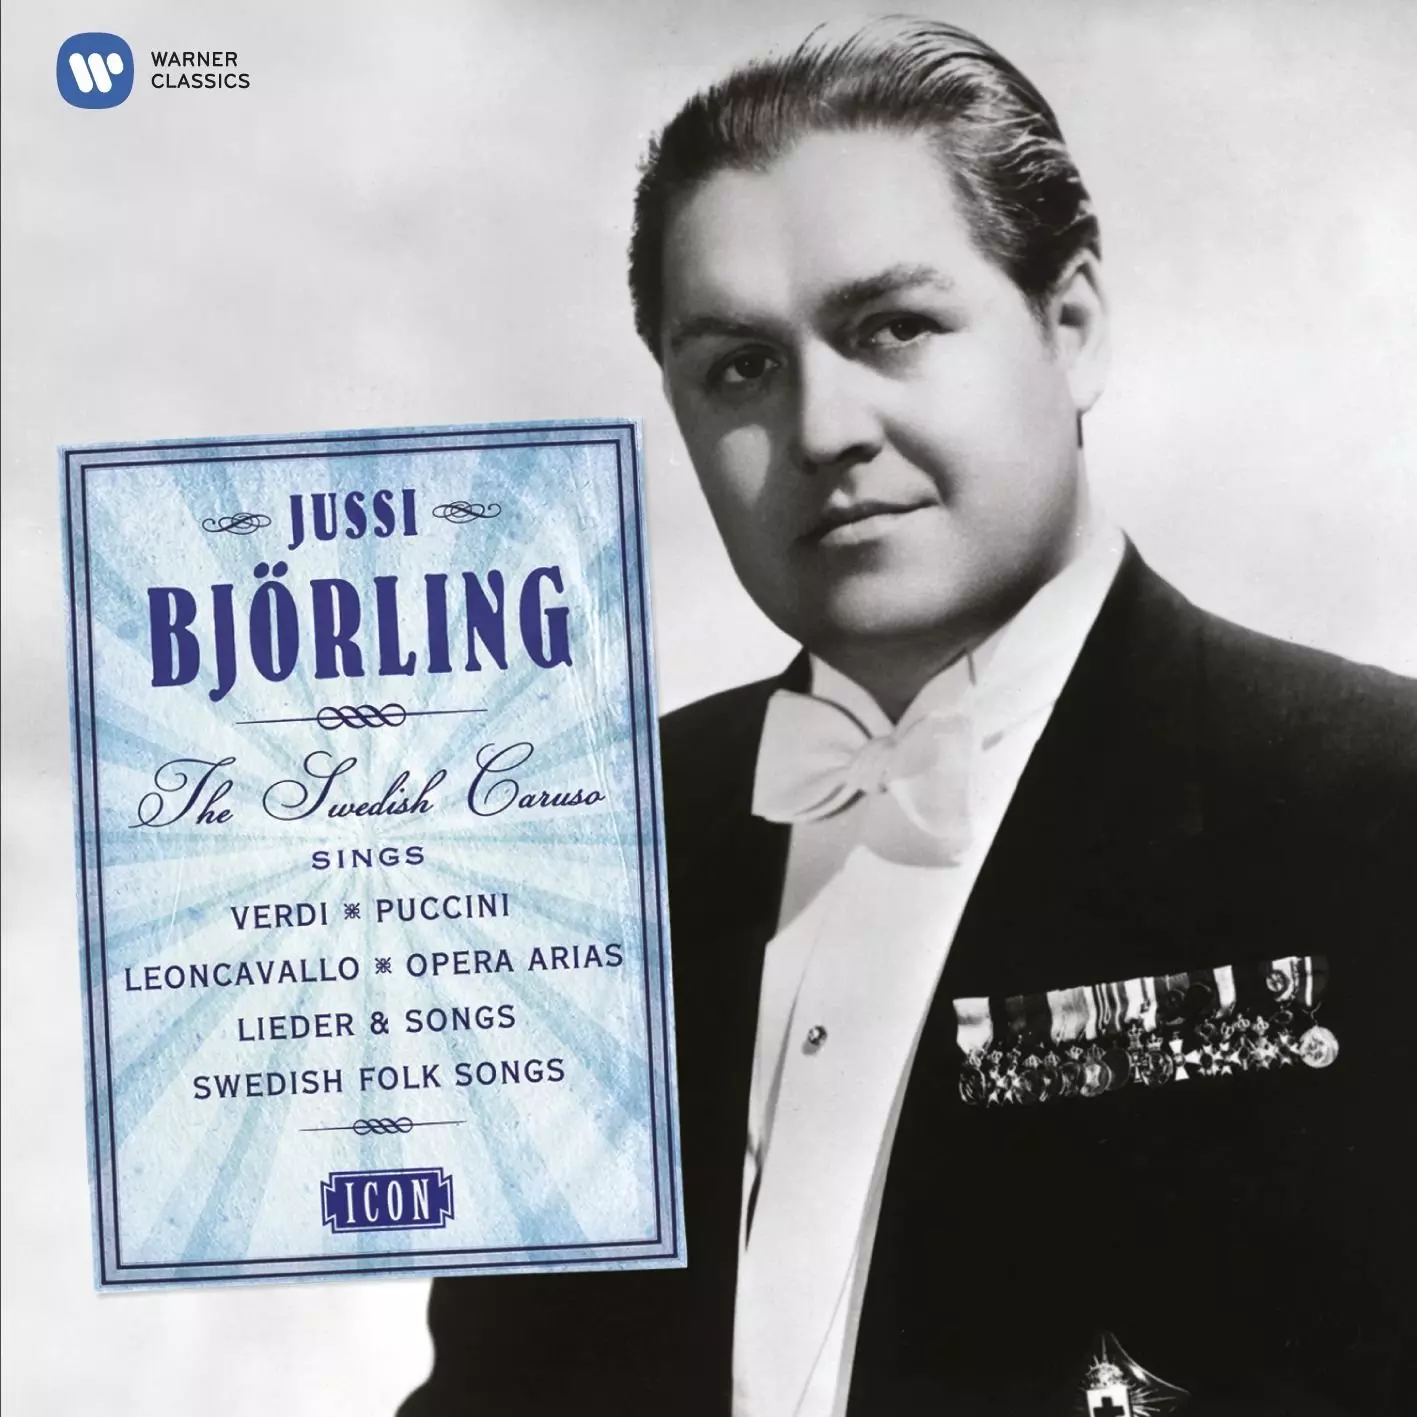 Jussi Bjorling